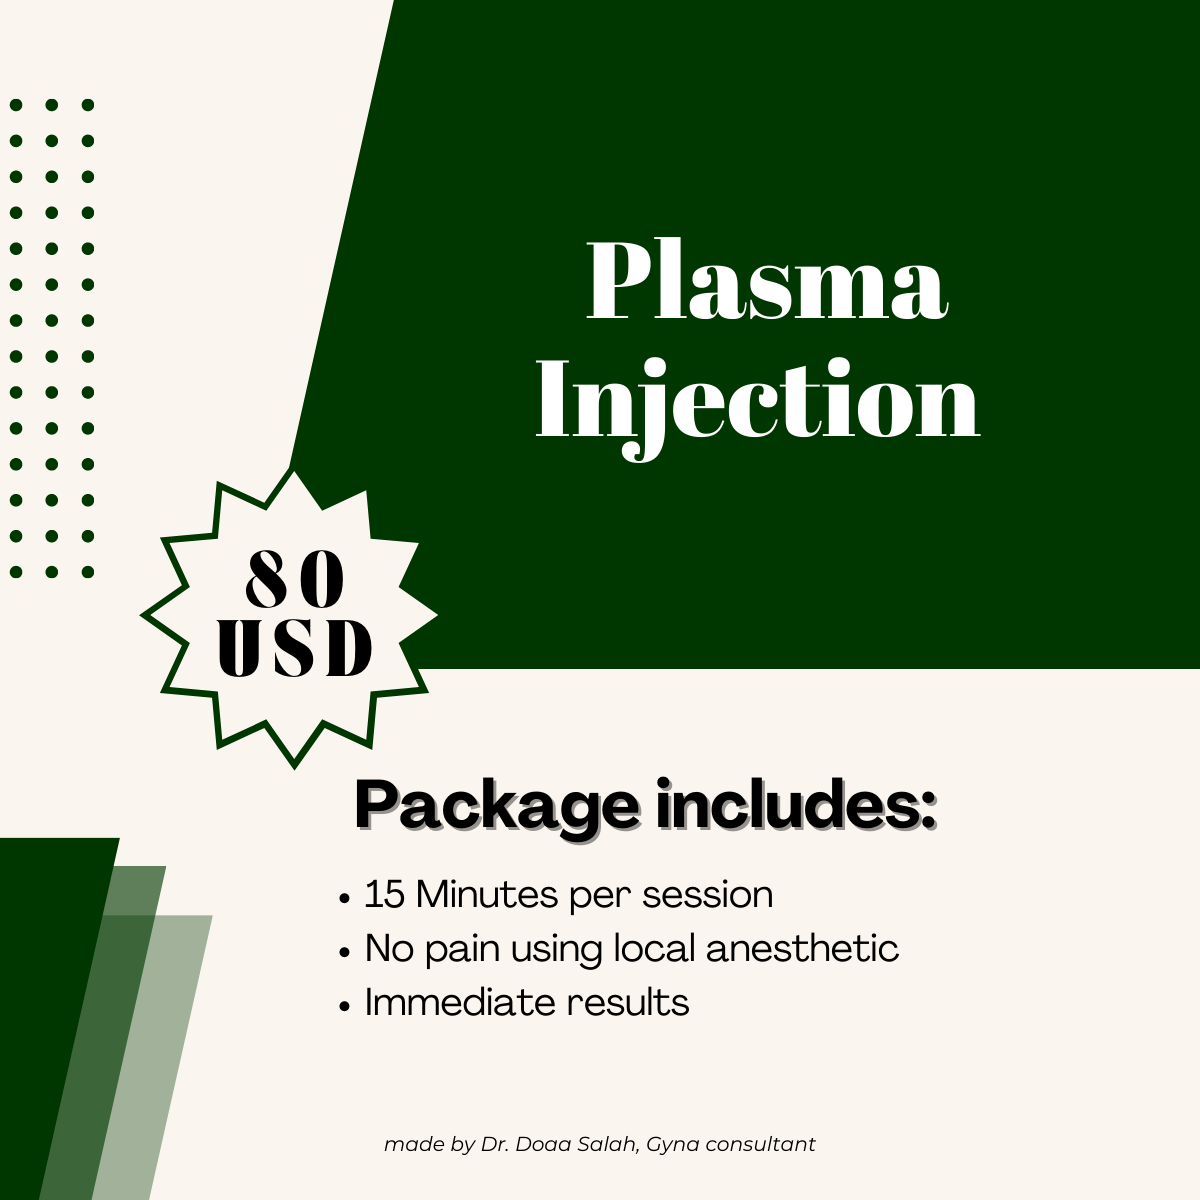 Plasma injection